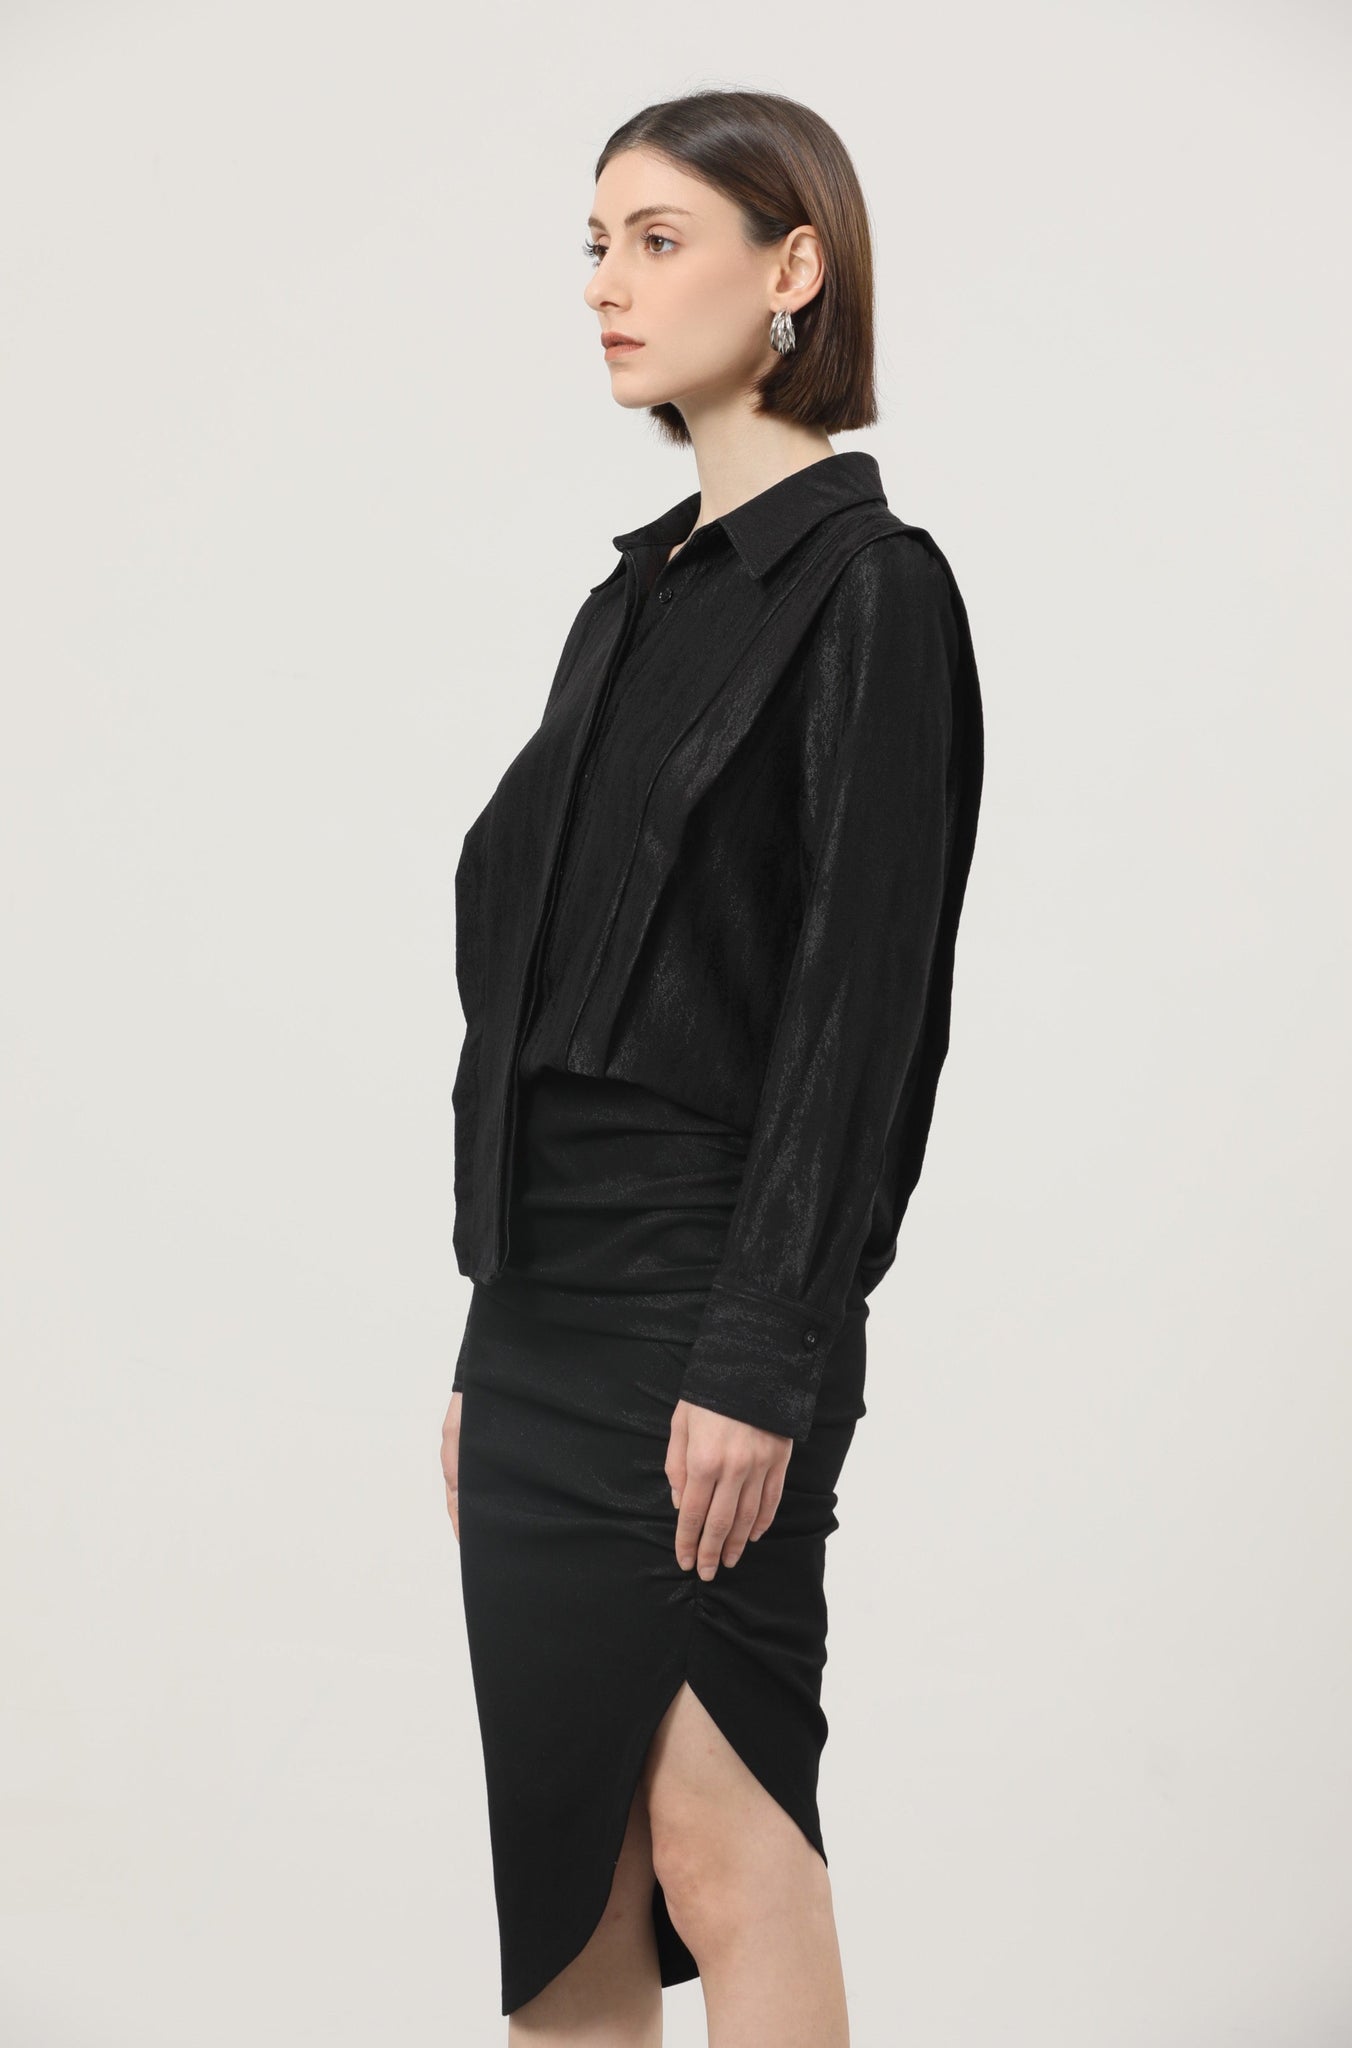 LINDONG | Manel Black Jacquard Shirt